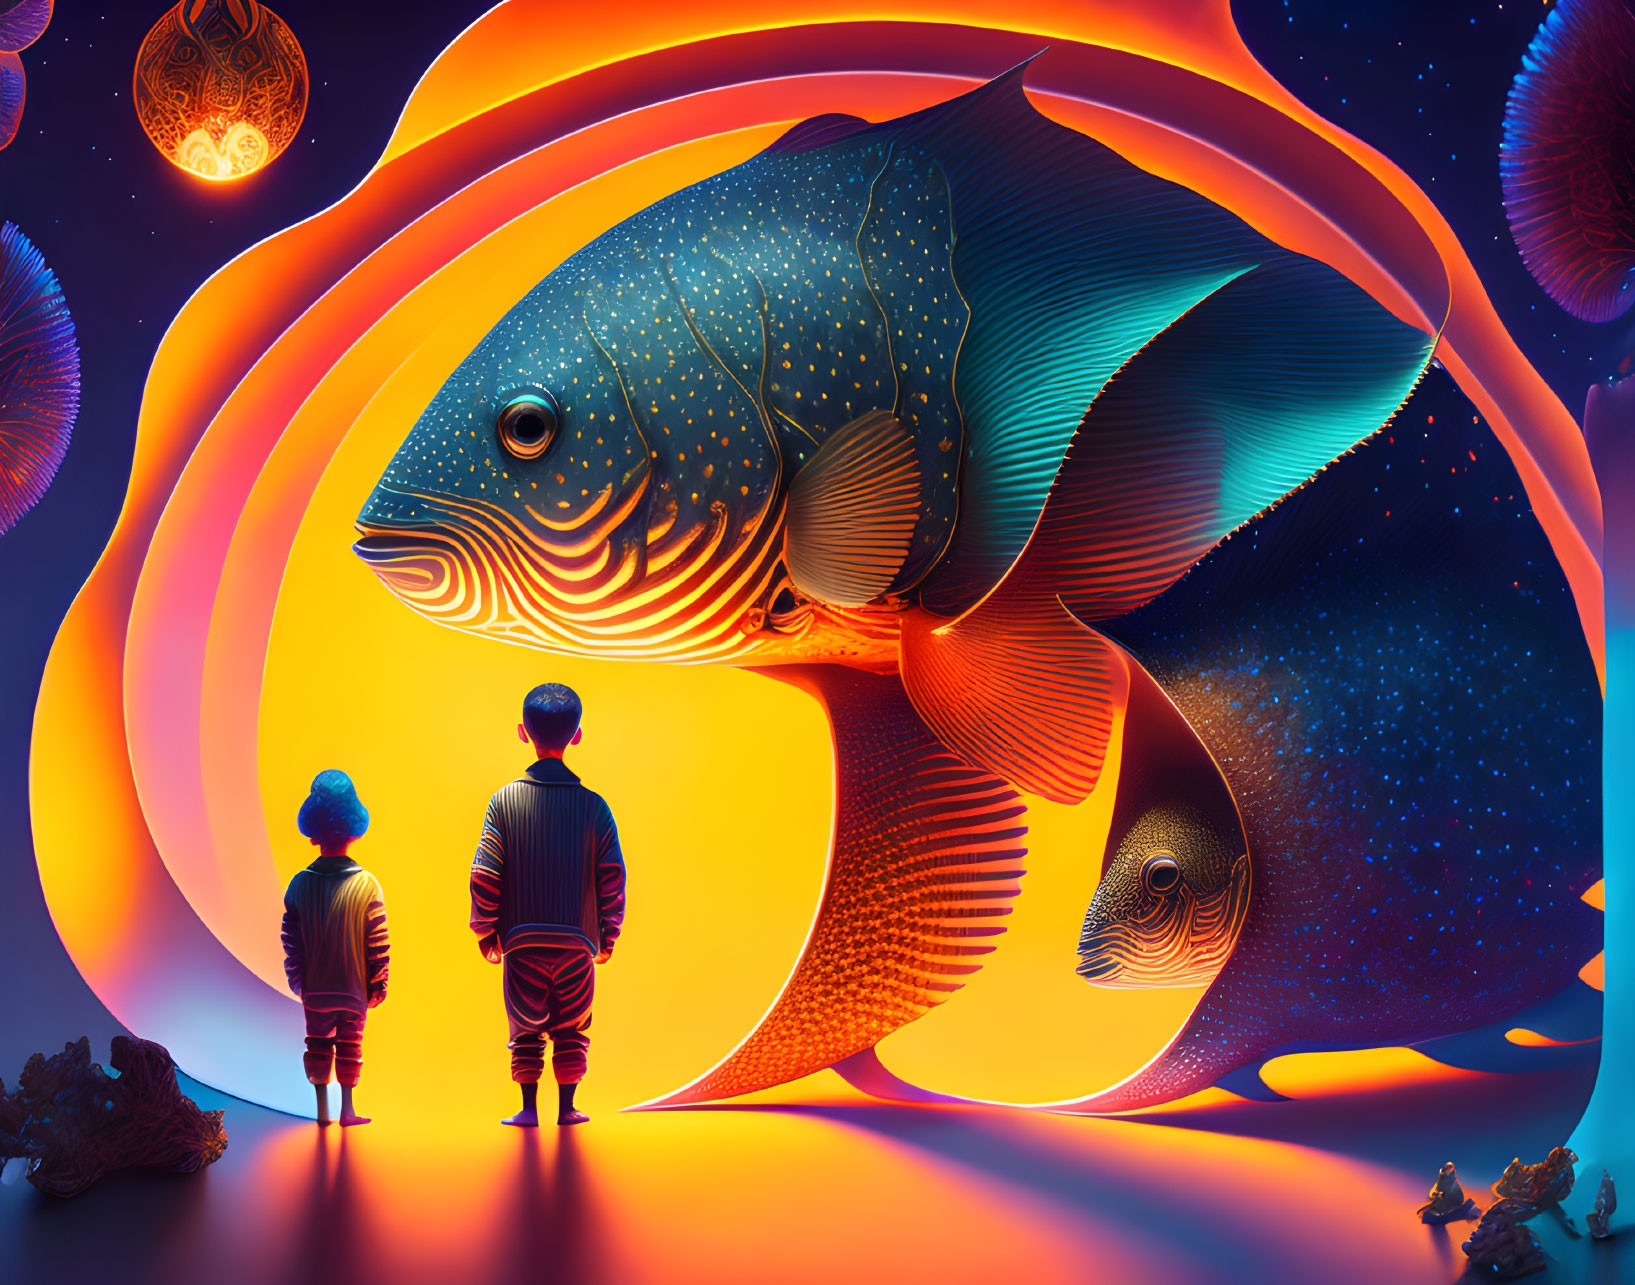 Children mesmerized by fantastical fish in vibrant cosmic ocean